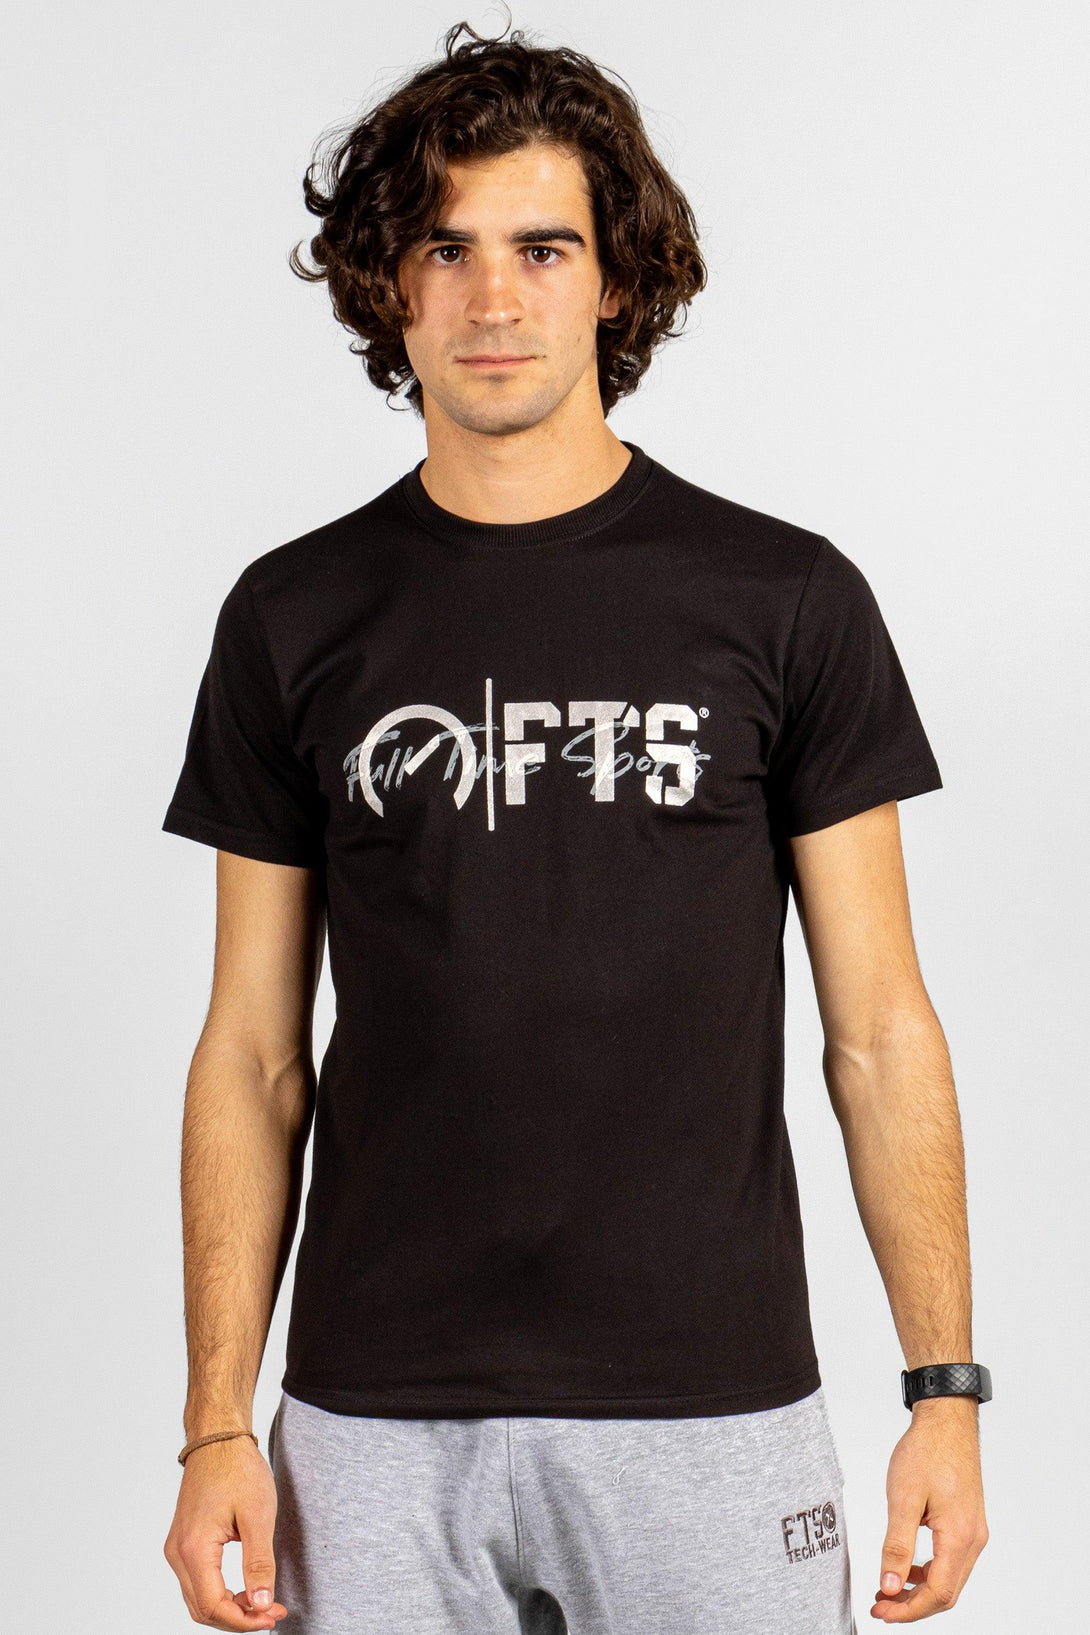 FTS Unique Blend Fabric Round Neck Tech T-Shirts - Pack of 5 - FTS